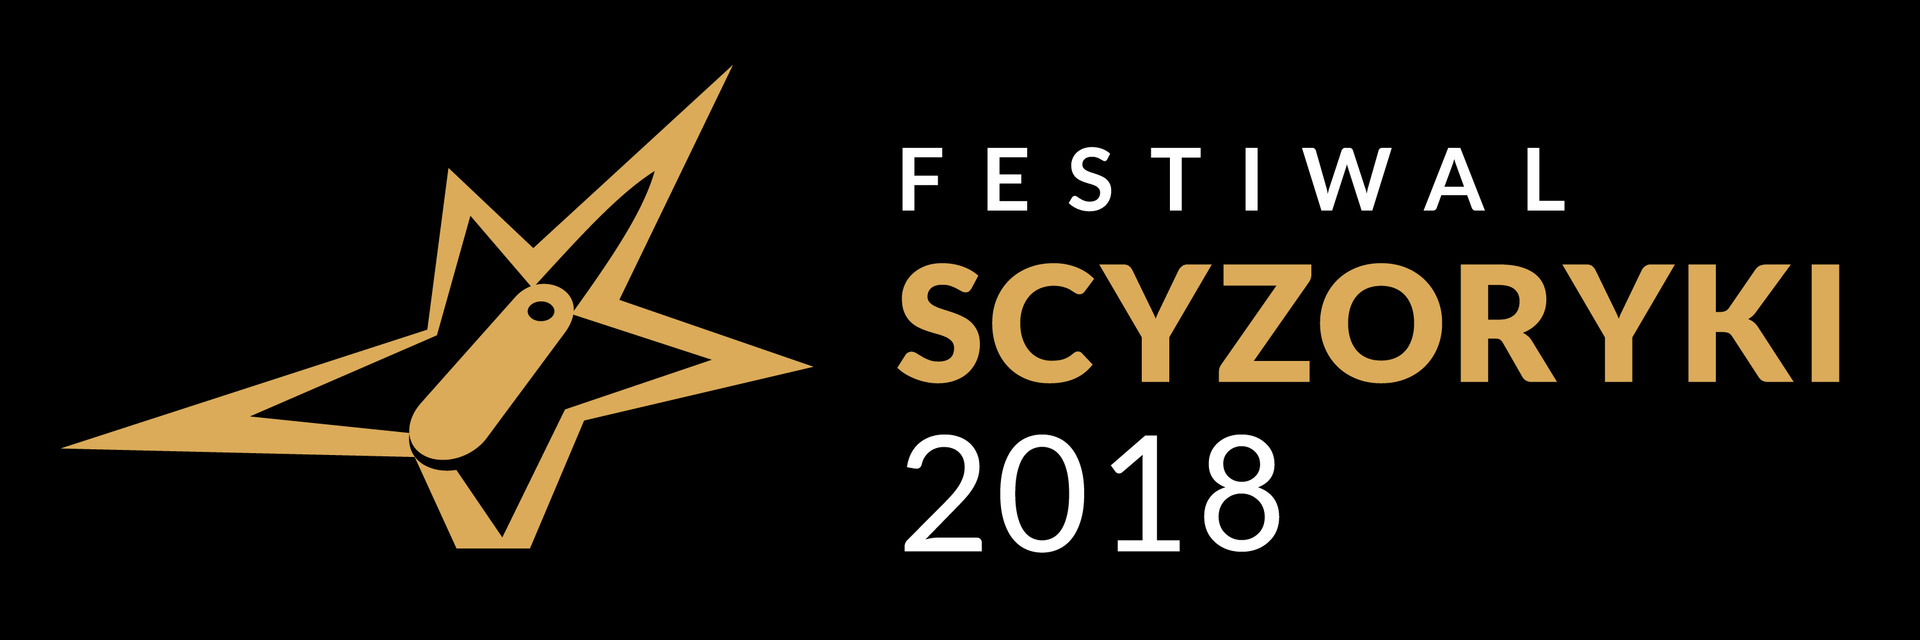 Festiwal Scyzoryki